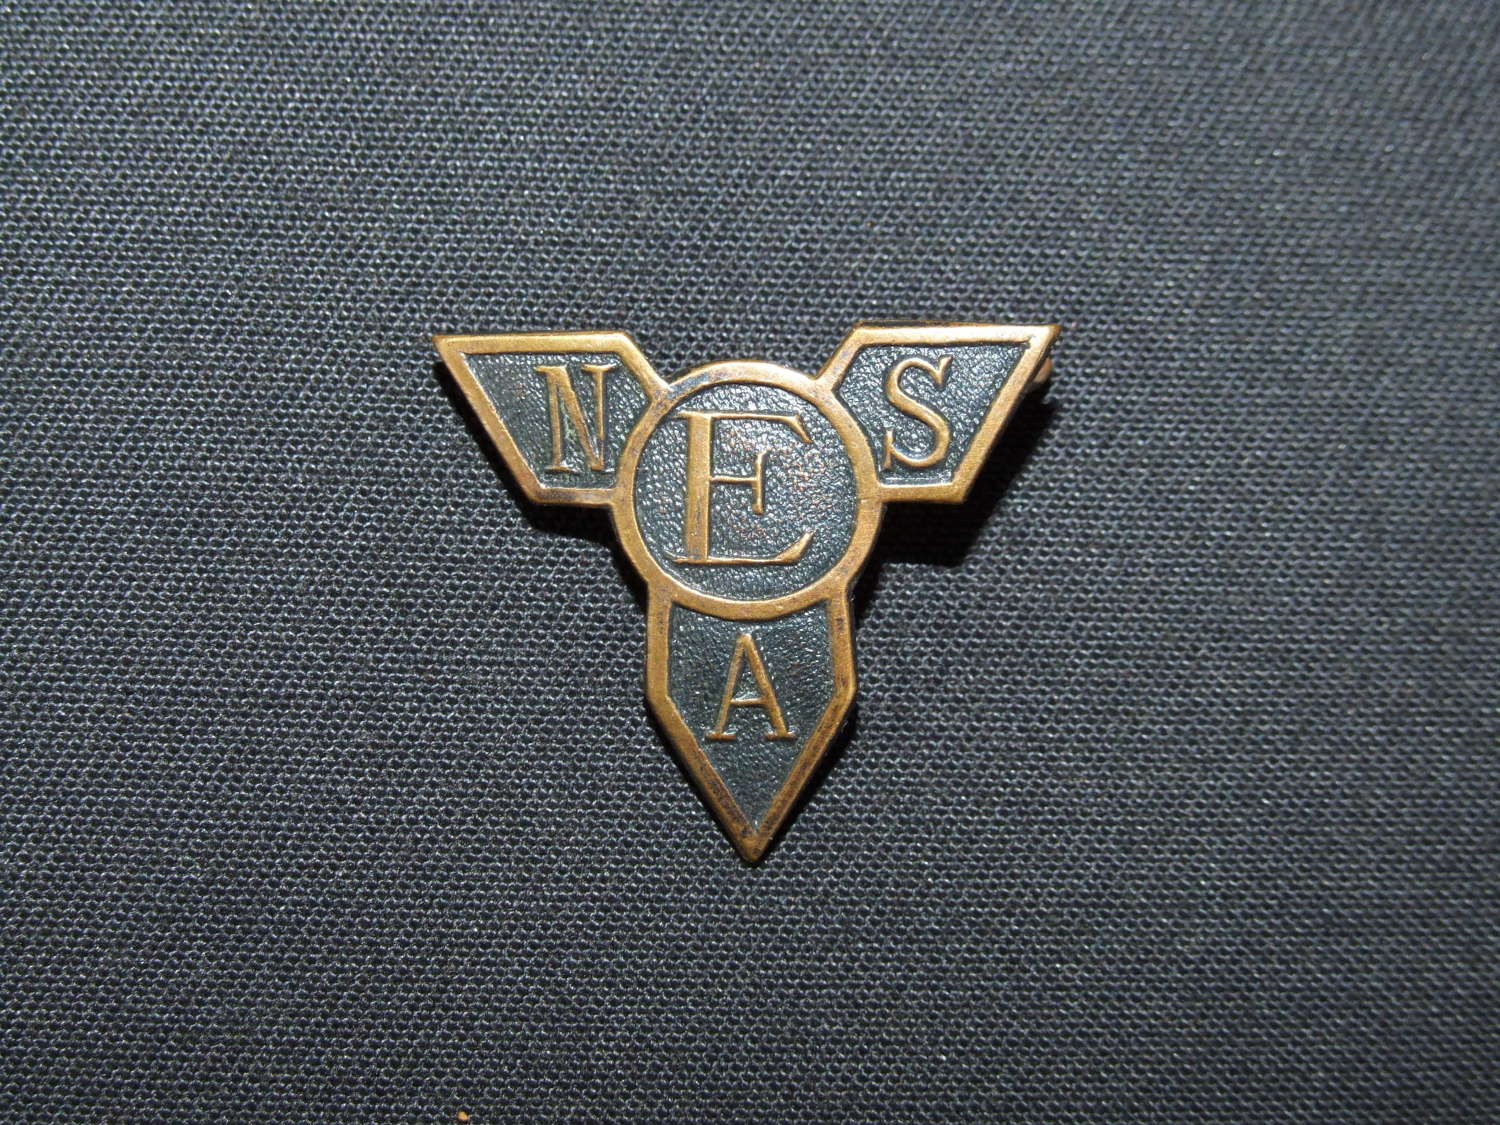 WW2 ENSA Cap or Lapel badge in Bronze